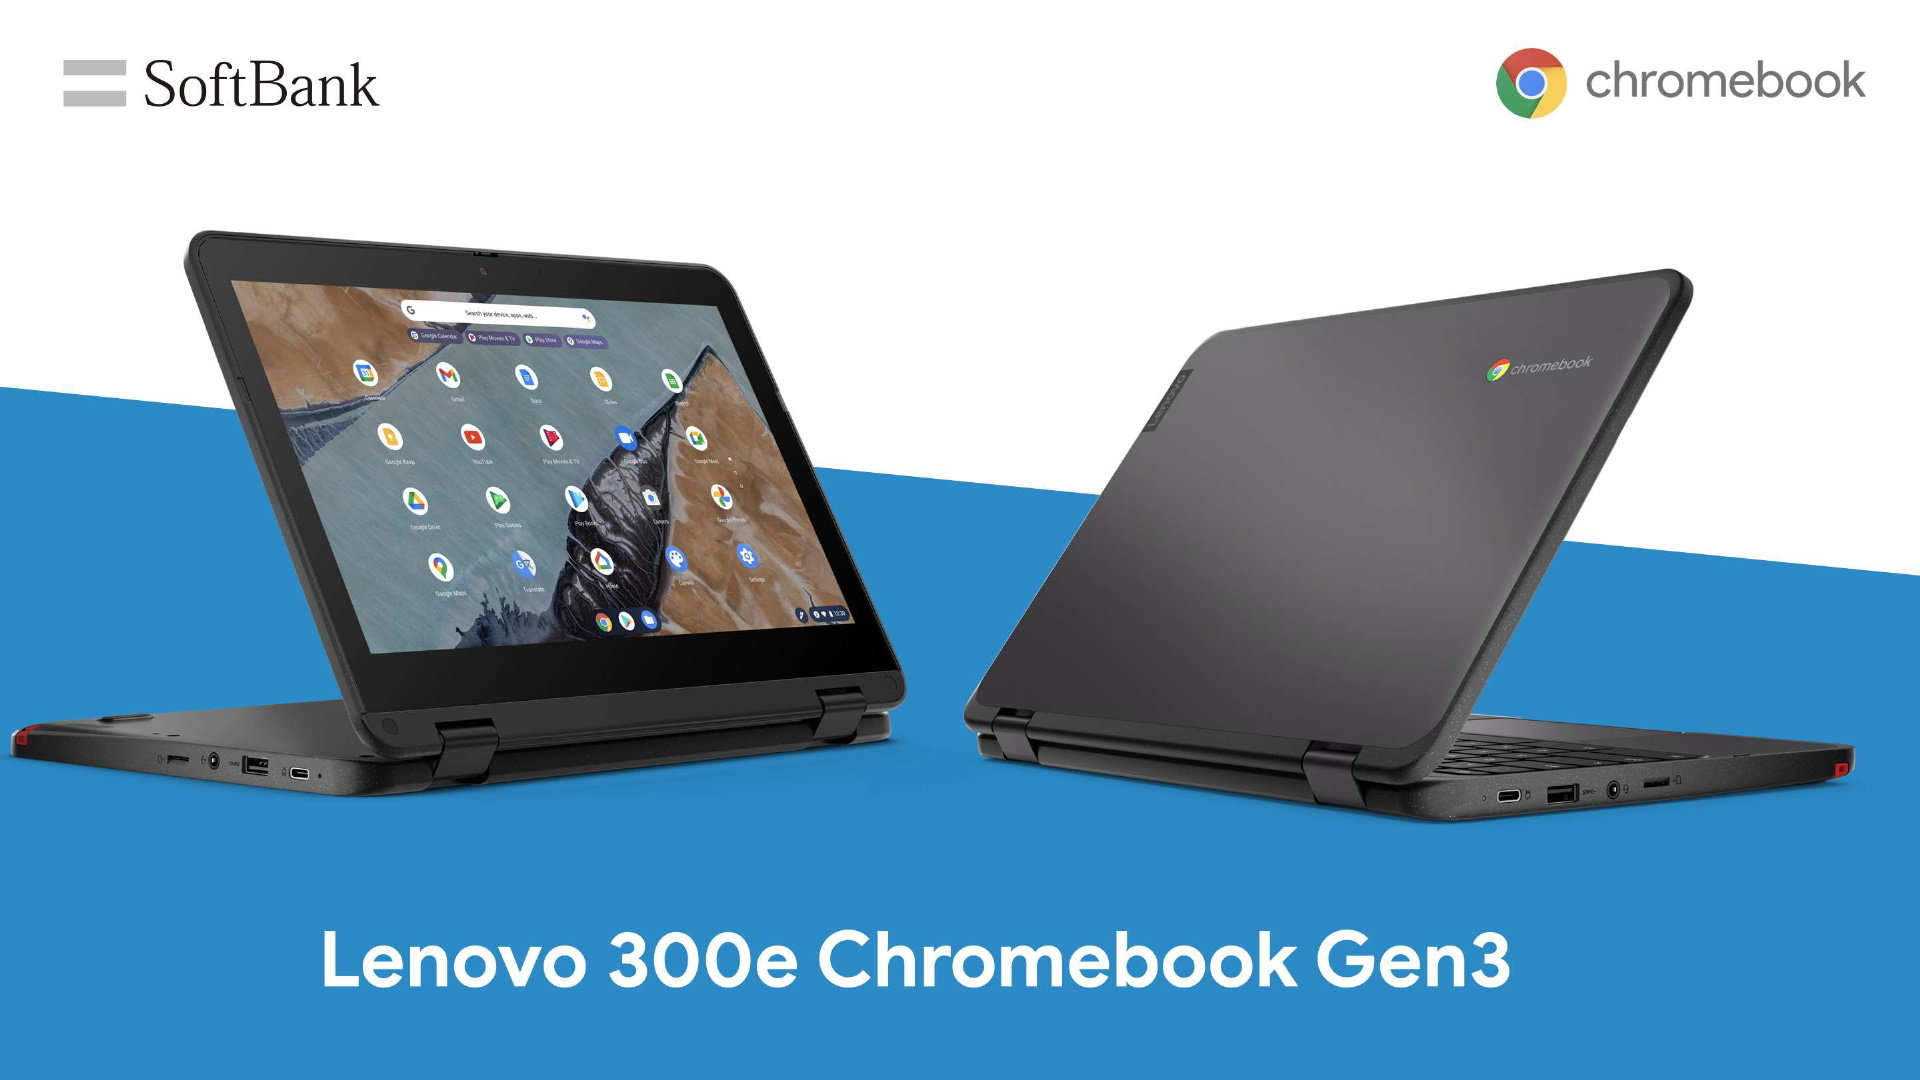 ##Lenovo 300e Chromebook Gen3